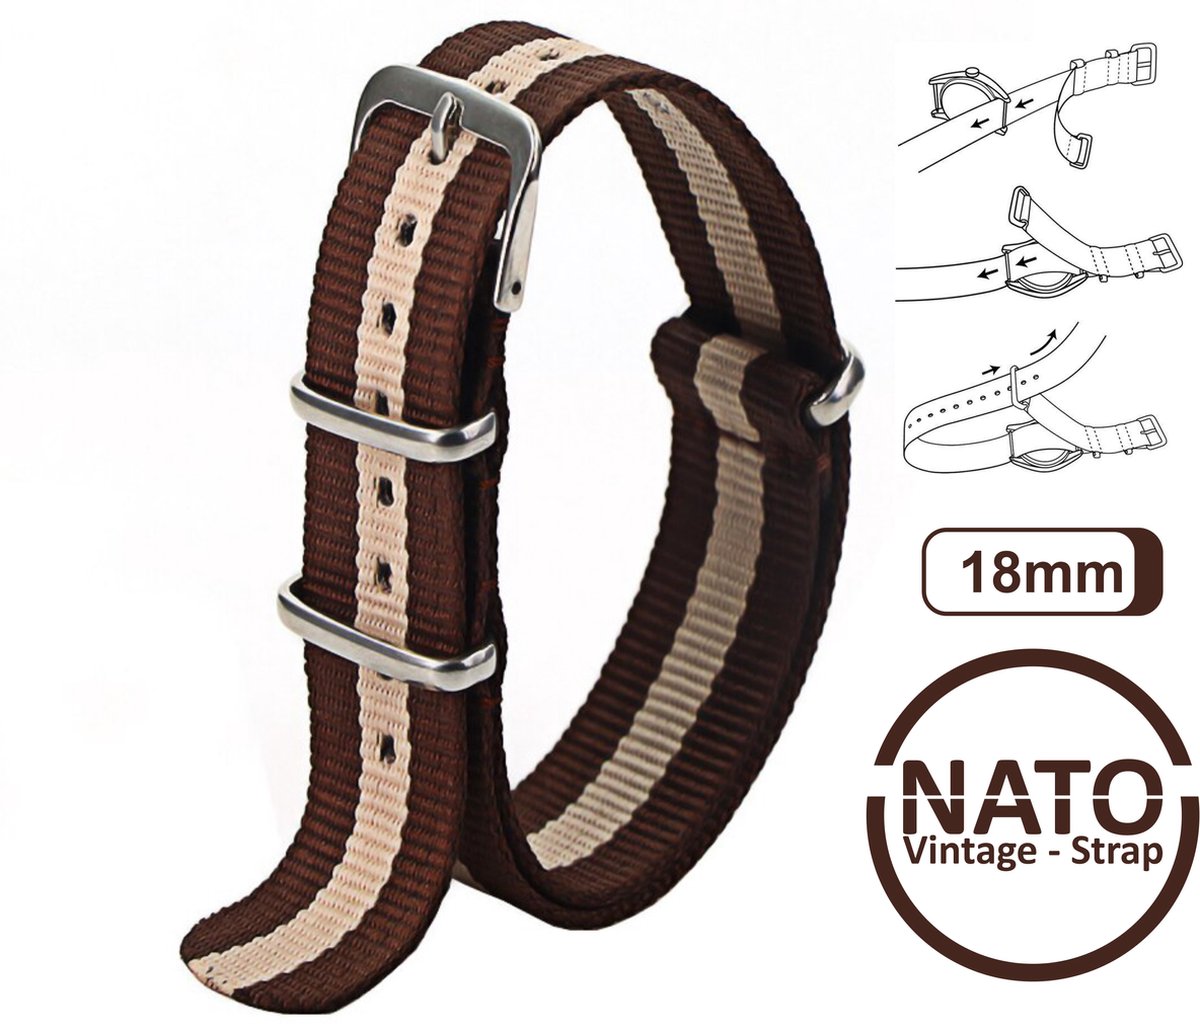 18mm Nato Strap Bruin met Khaki streep - Vintage James Bond - Nato Strap collectie - Mannen - Horlogebanden - Brown - 18 mm bandbreedte voor oa. Seiko Rolex Omega Casio en Citizen